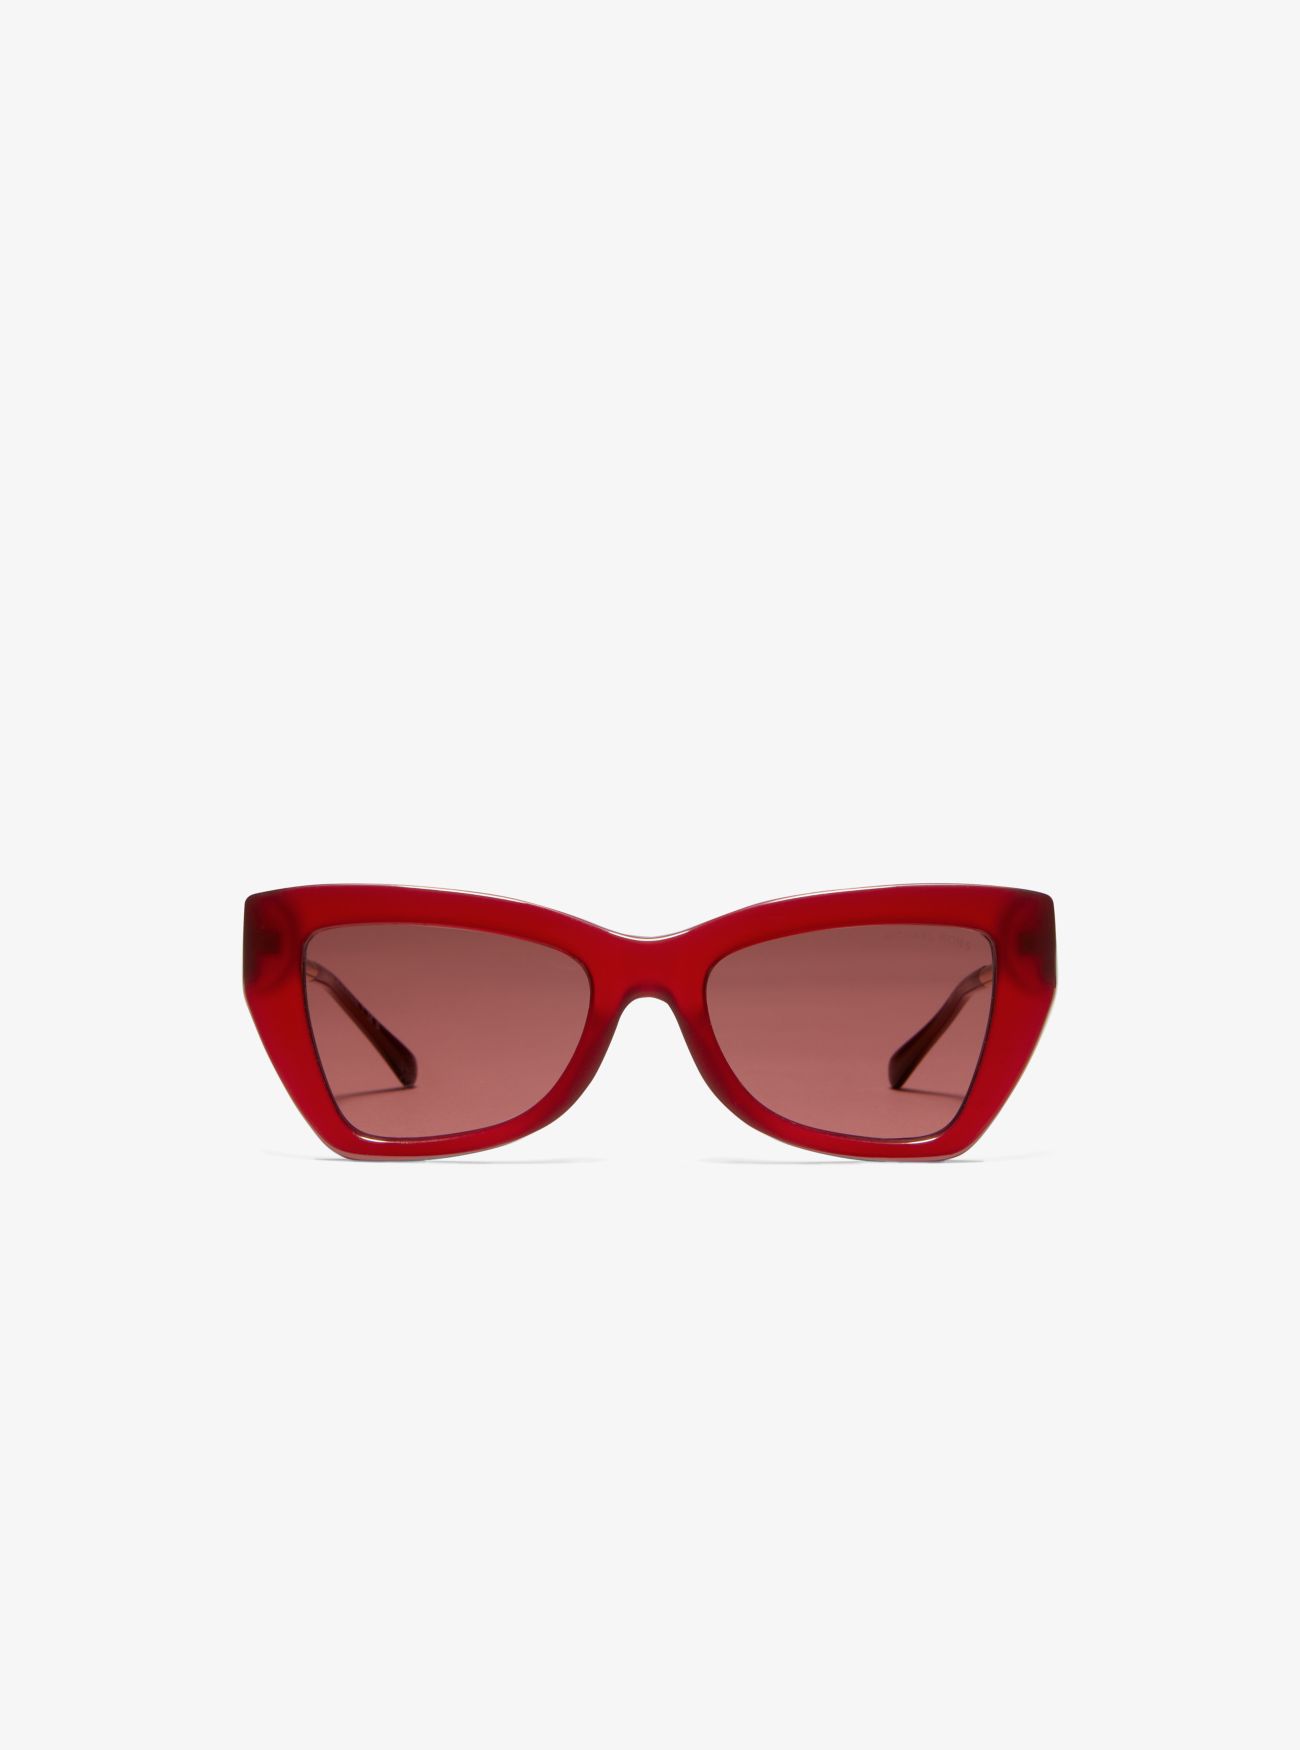 MK Montecito Sunglasses - Red - Michael Kors